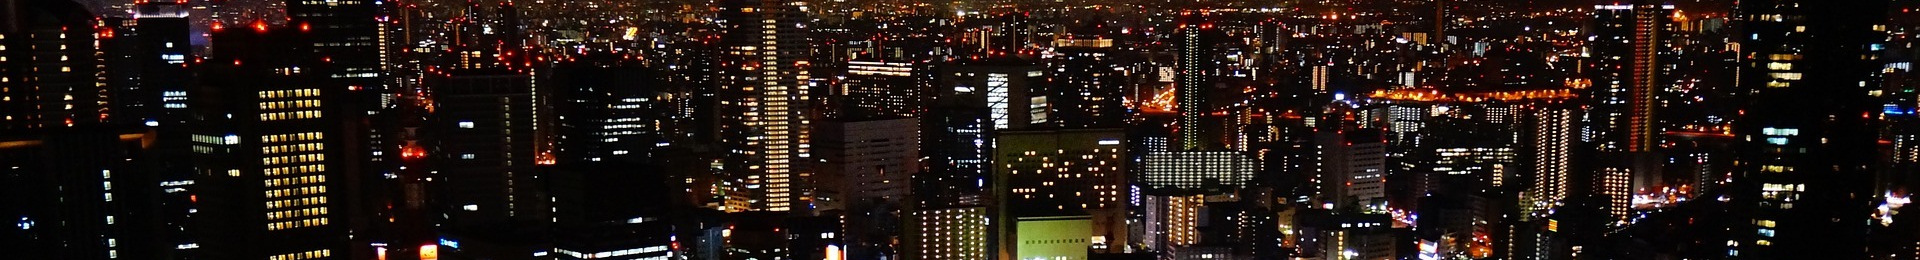 Photograph: Osaka, Japan skyline at night.